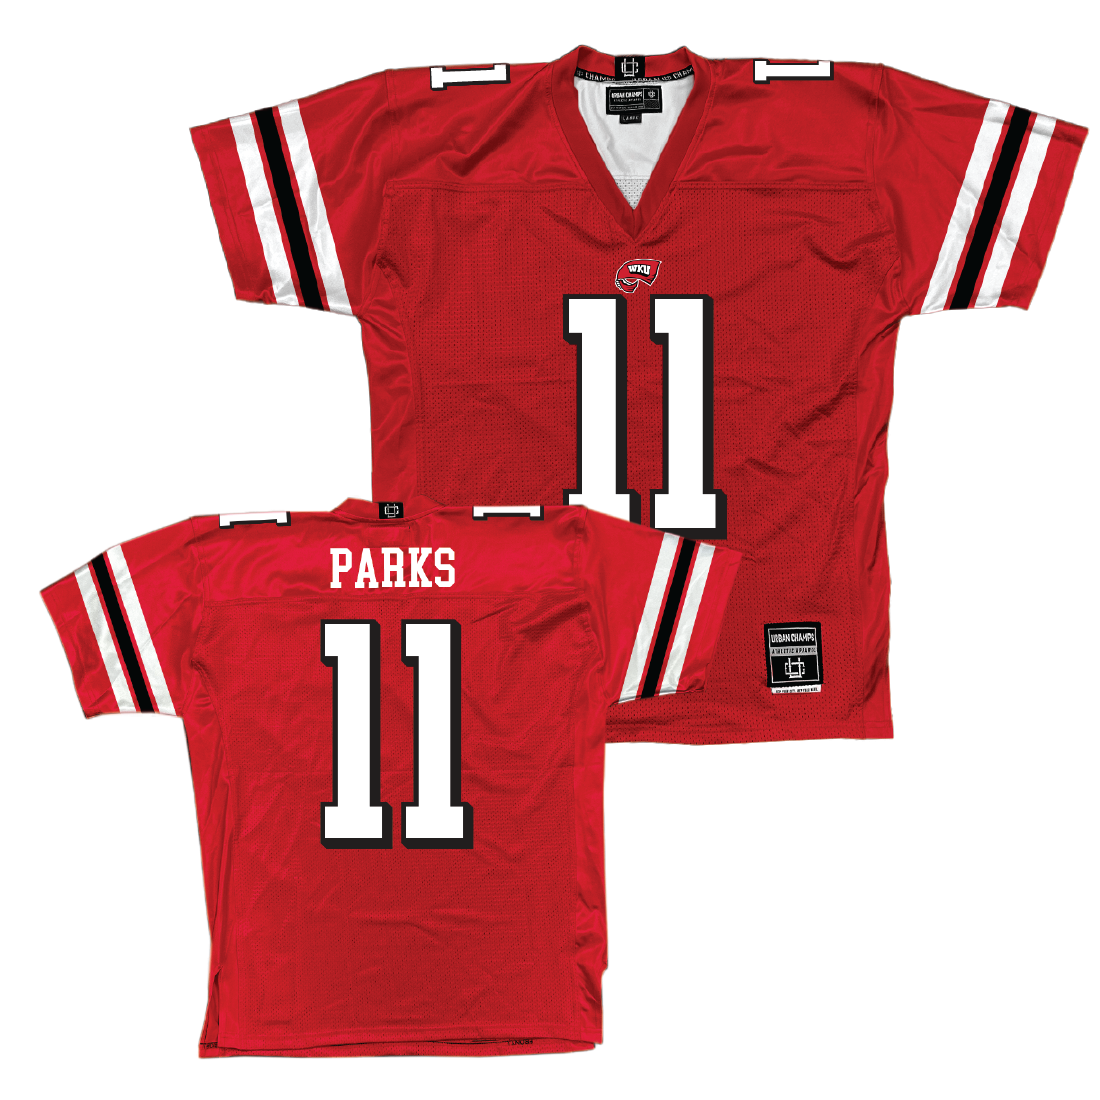 Red WKU Football Jersey - Tucker Parks